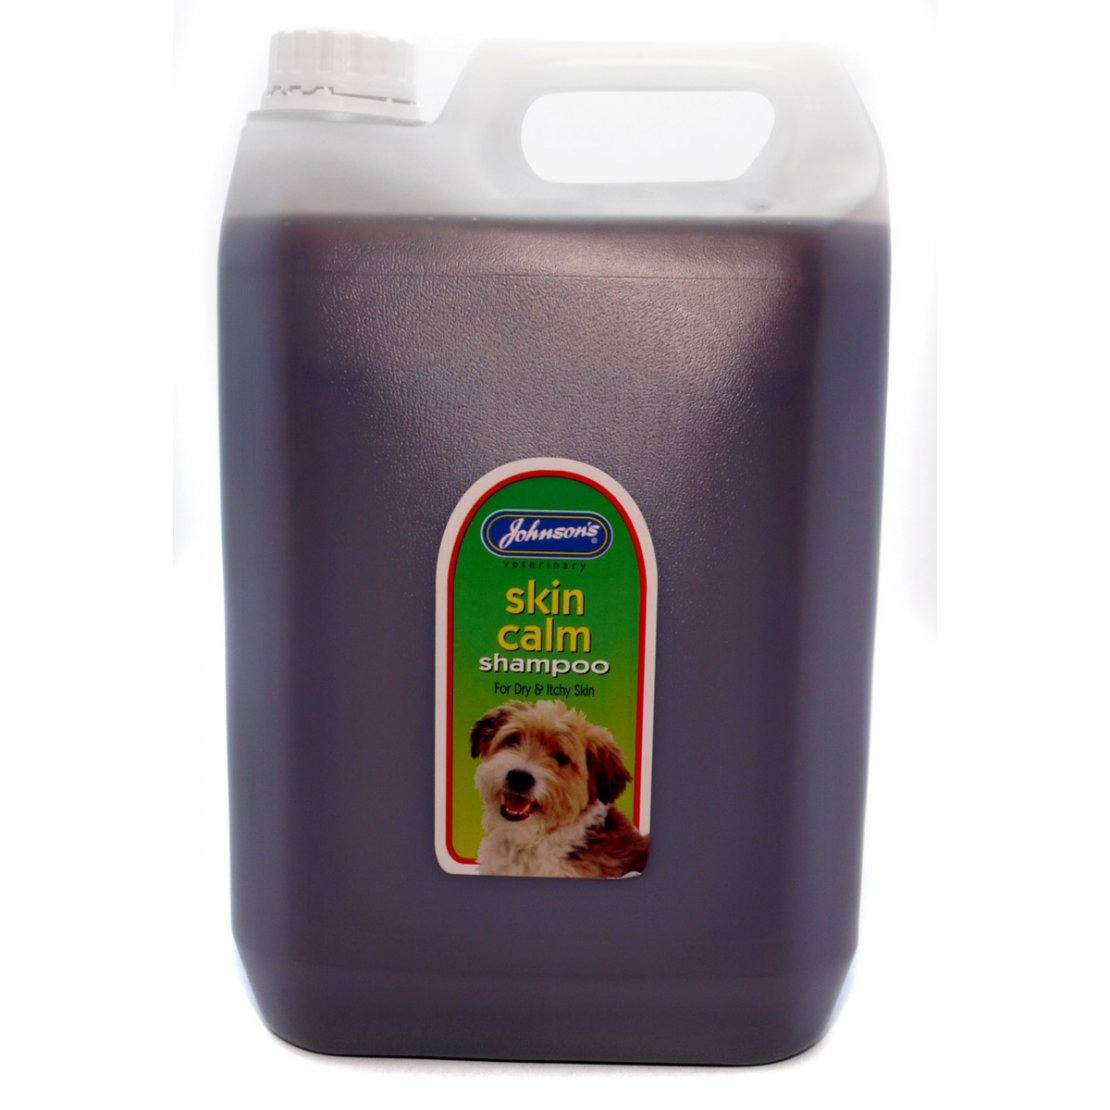 Johnsons Skin Calm Shampoo for Dogs - 5 litre